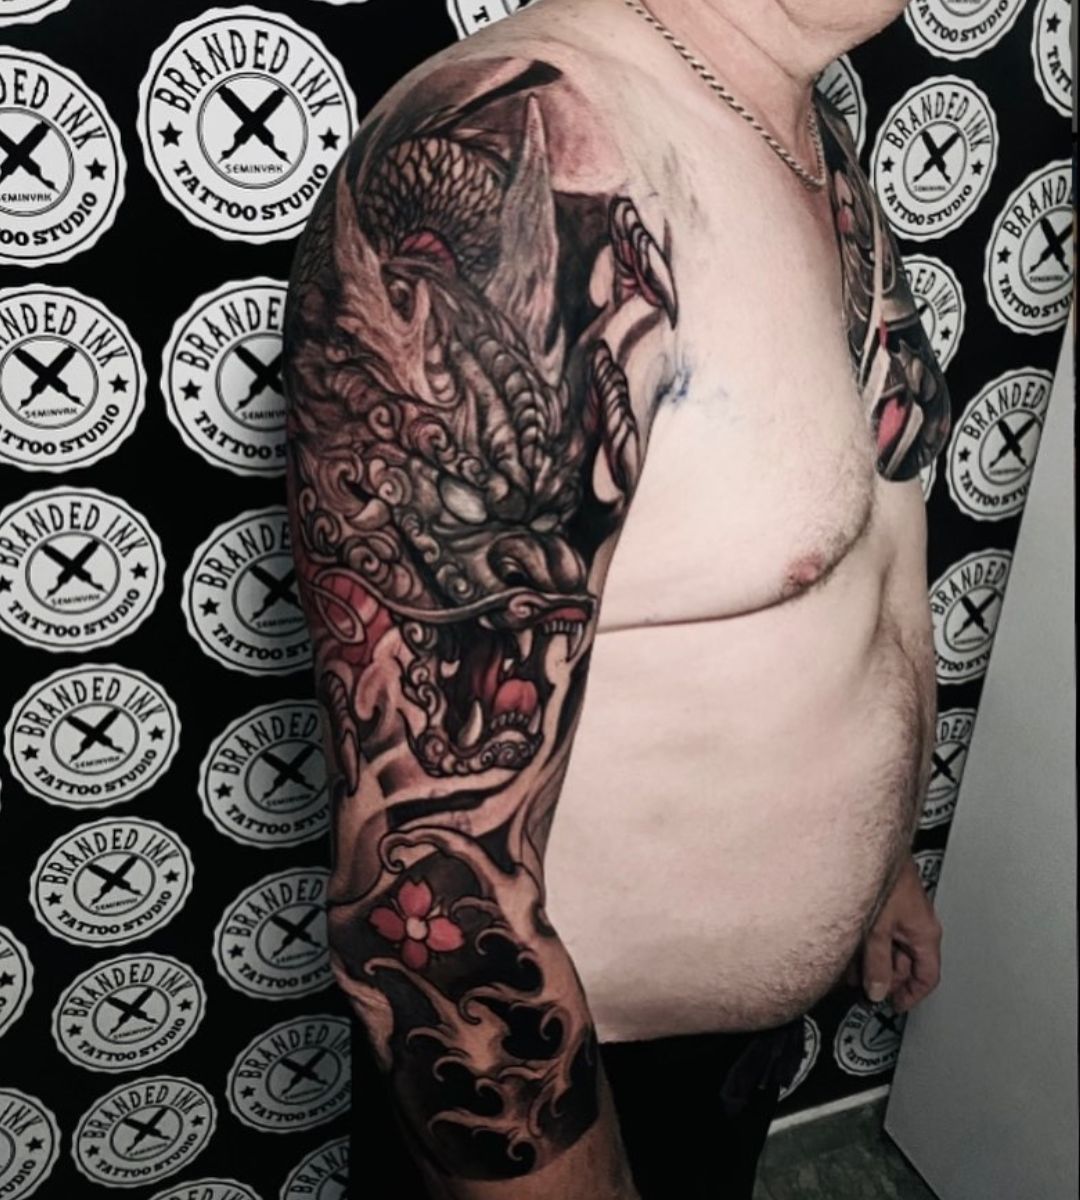 Tattoo collection idea? (Not my photo) : r/TattooDesigns